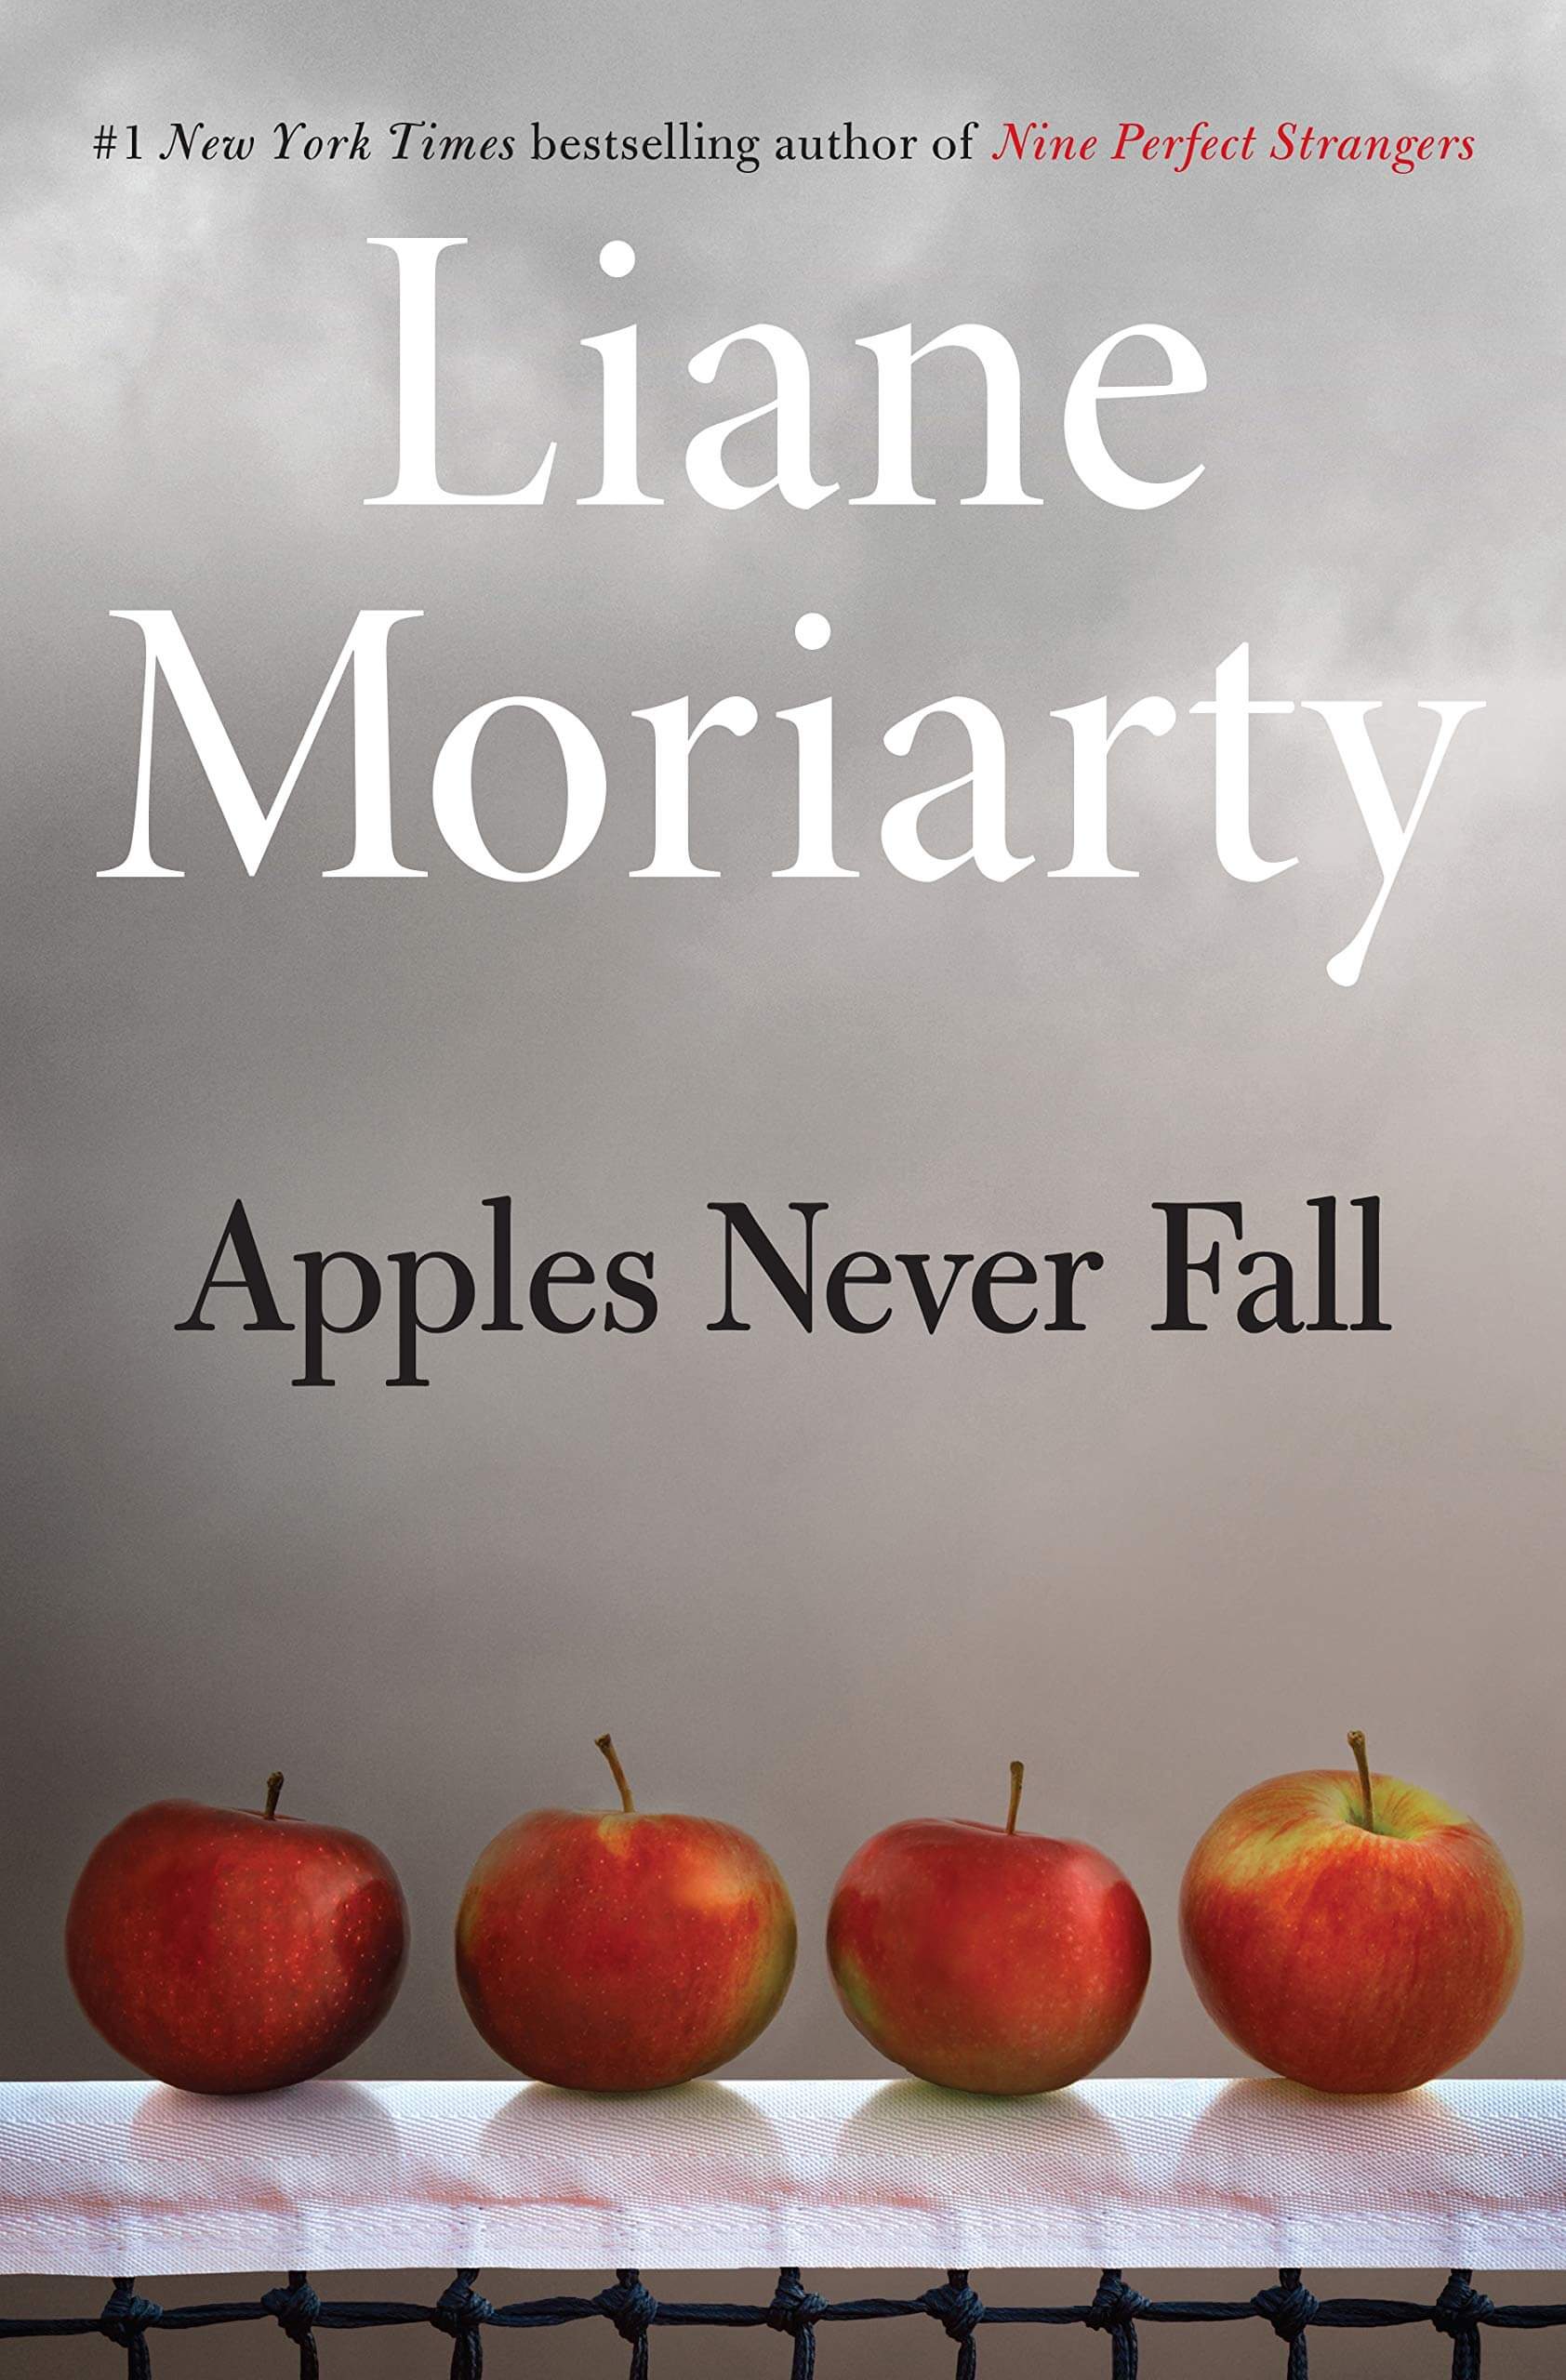 ApplesNeverFall LianeMoriarty